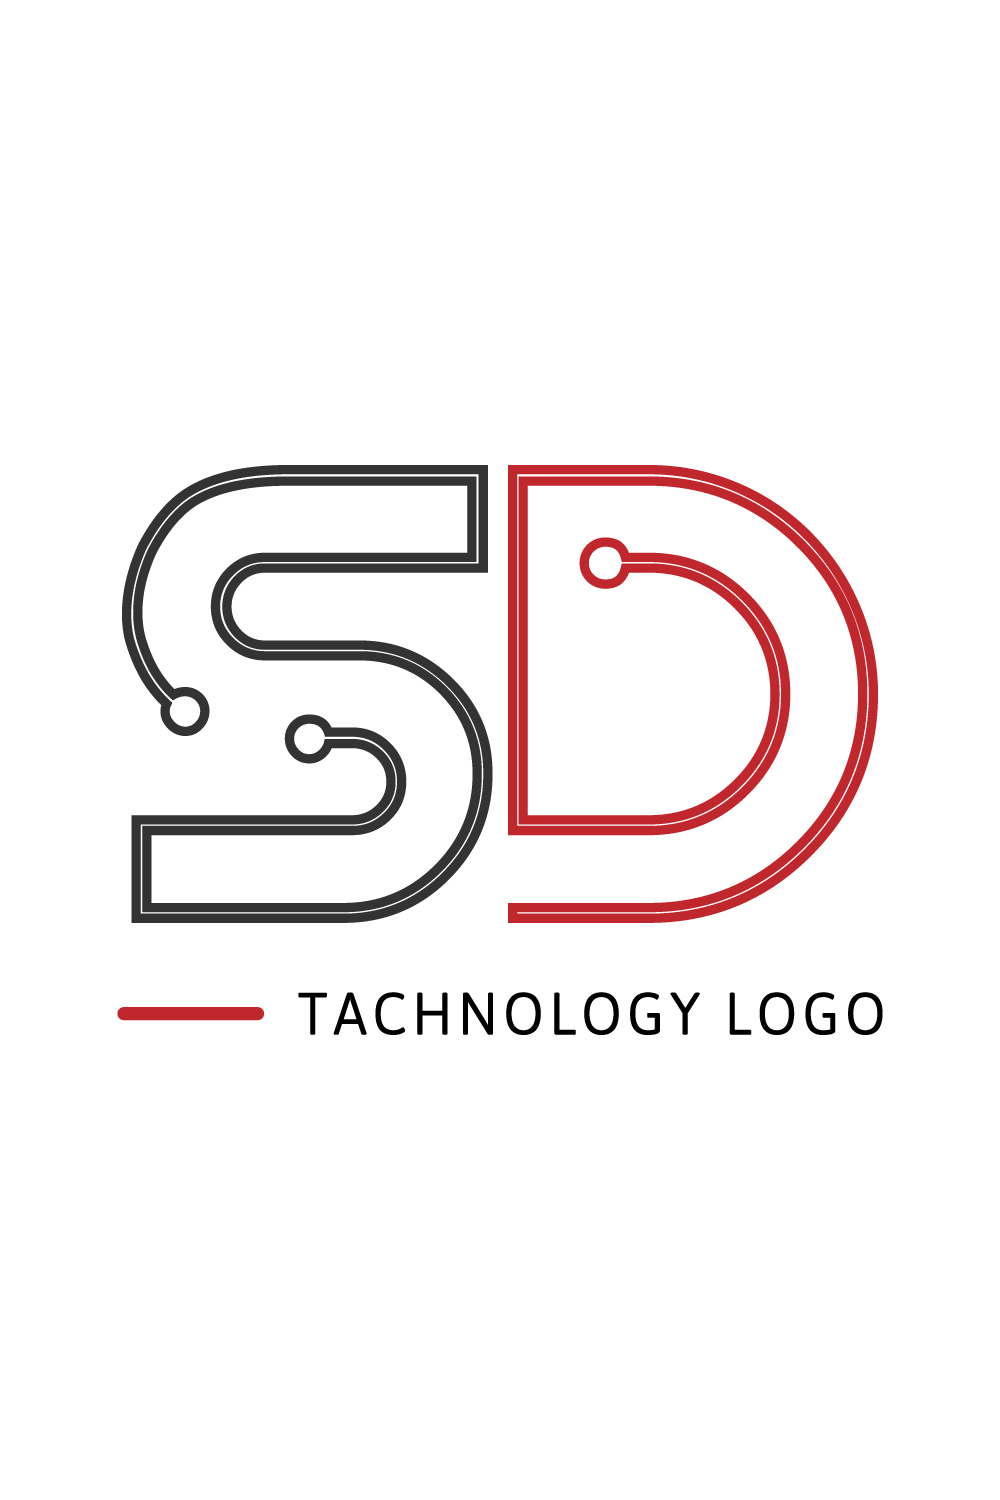 Initials SD letters logo design vector icon SD technology logo design DS logo monogram best identity SD logo design template arts pinterest preview image.